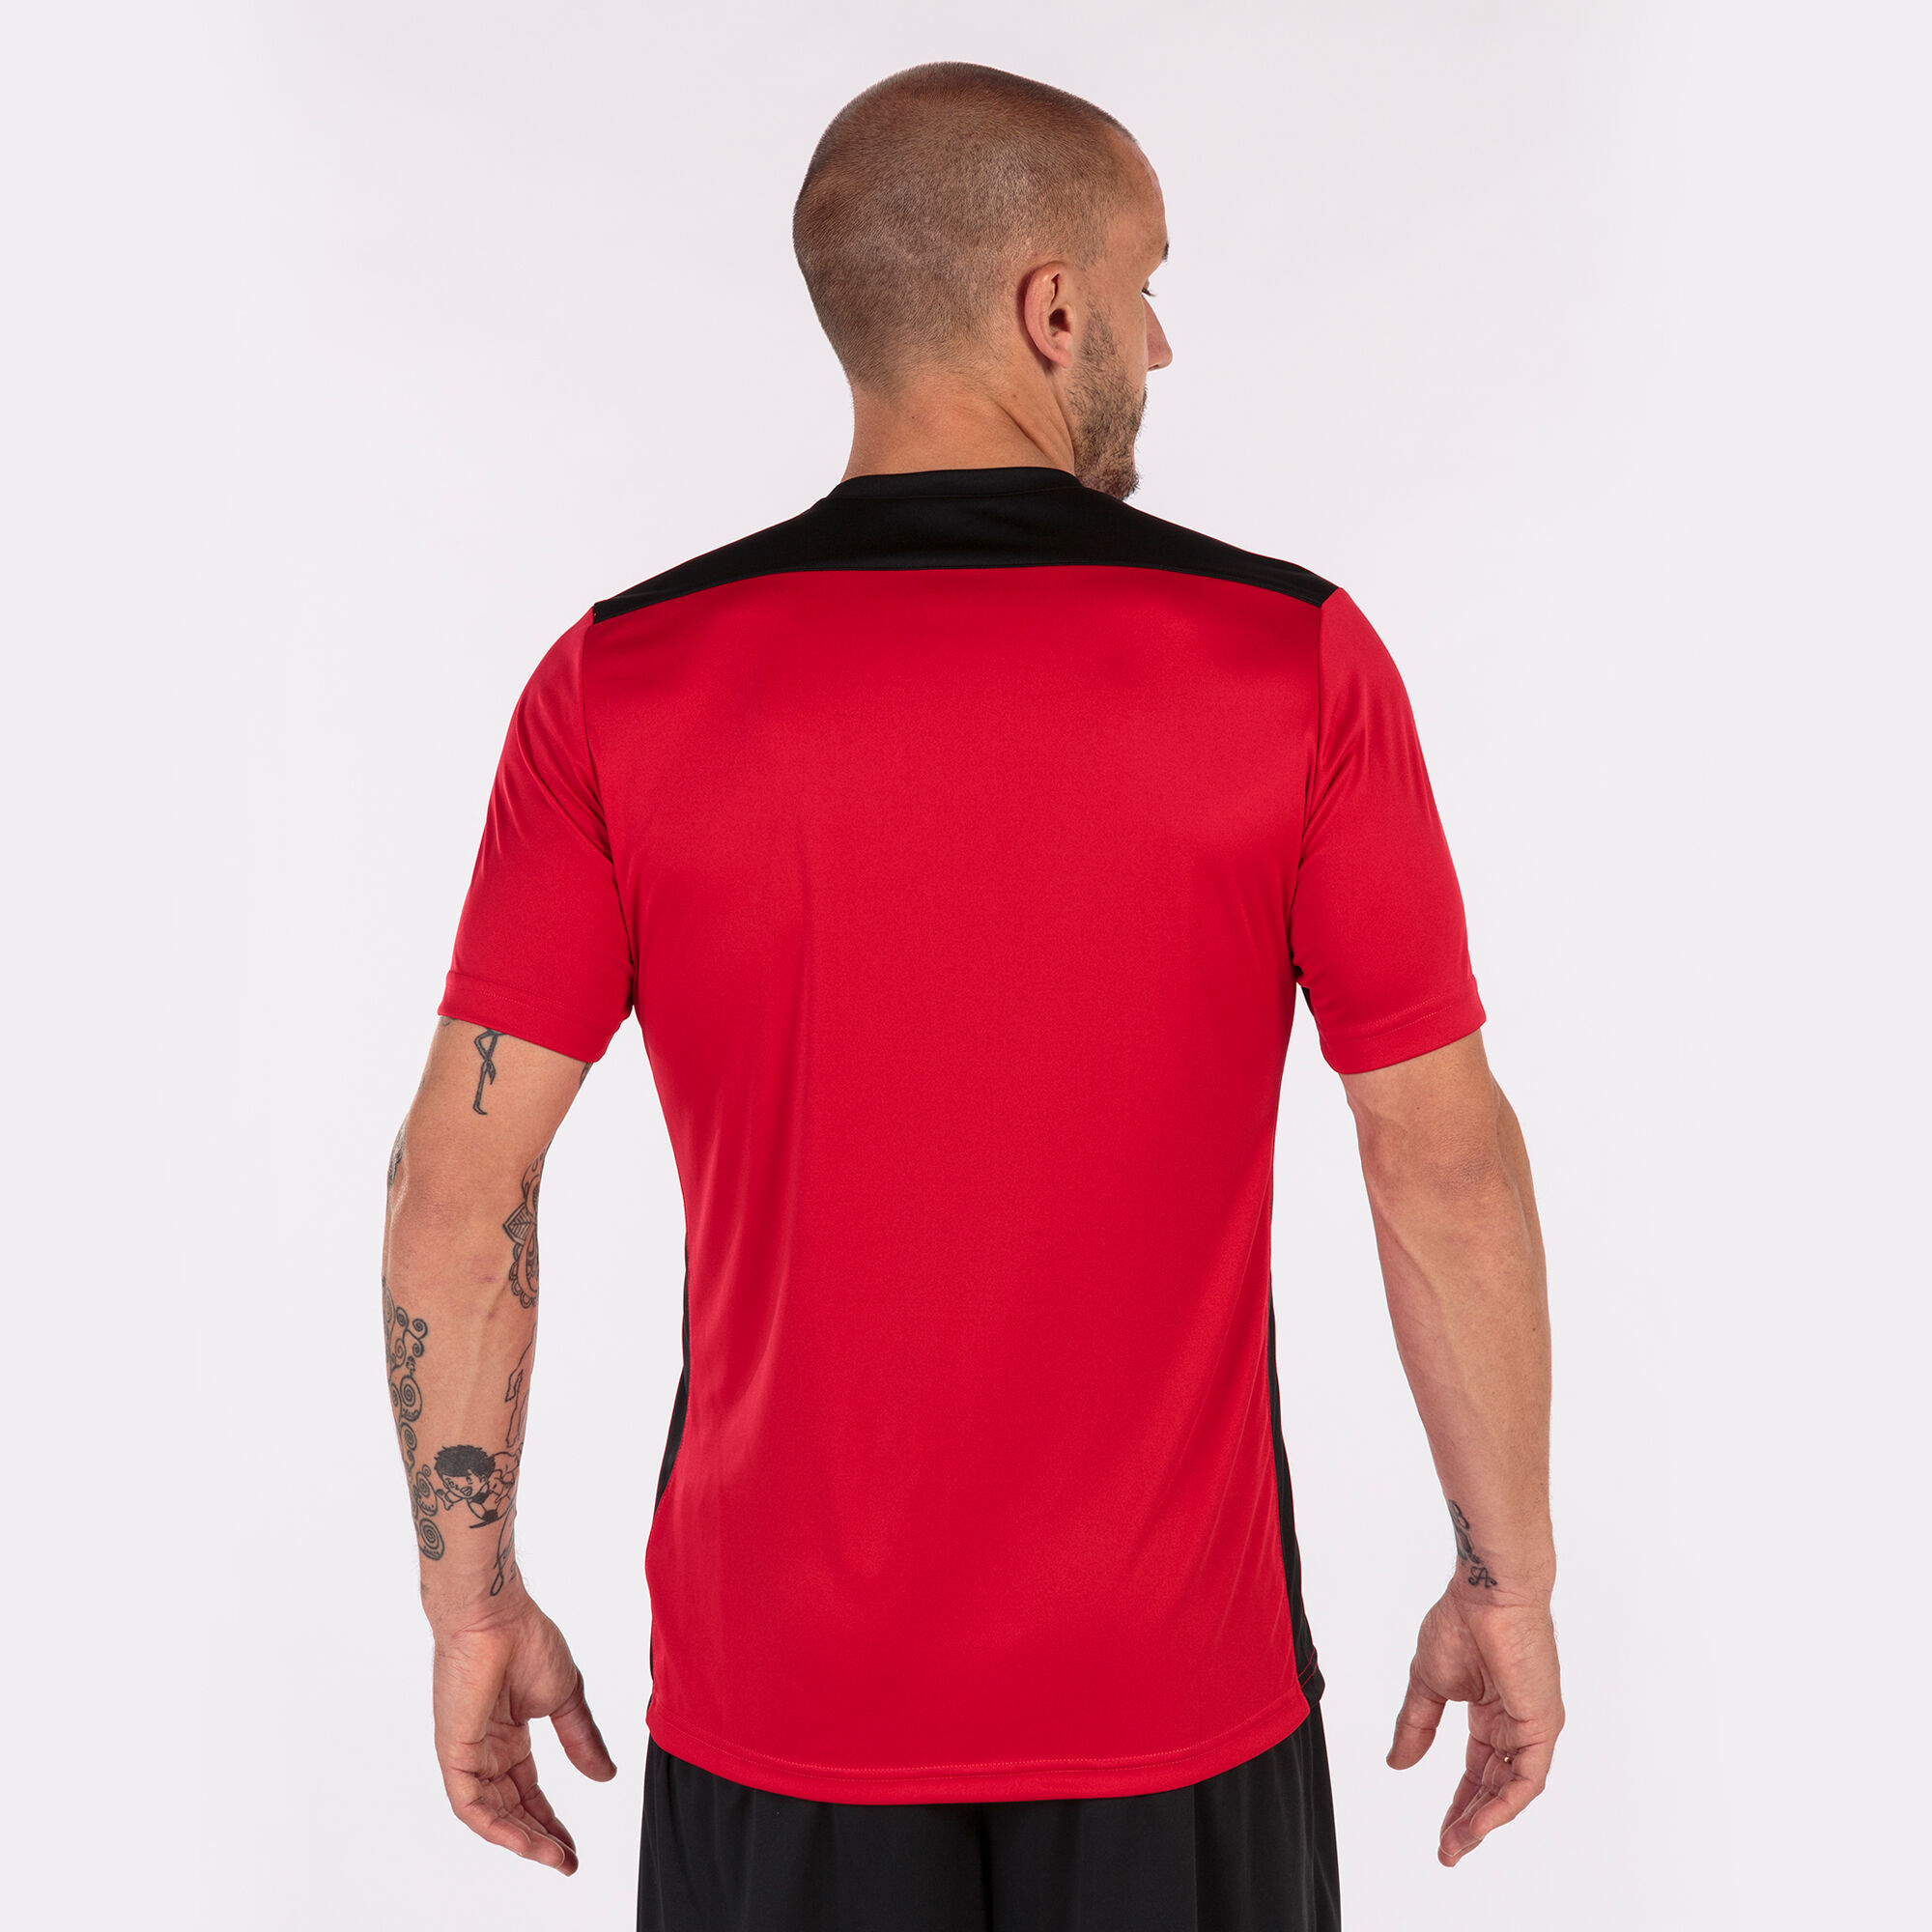 Joma Championship VI Camiseta, Hombre, Rojo-Negro, M